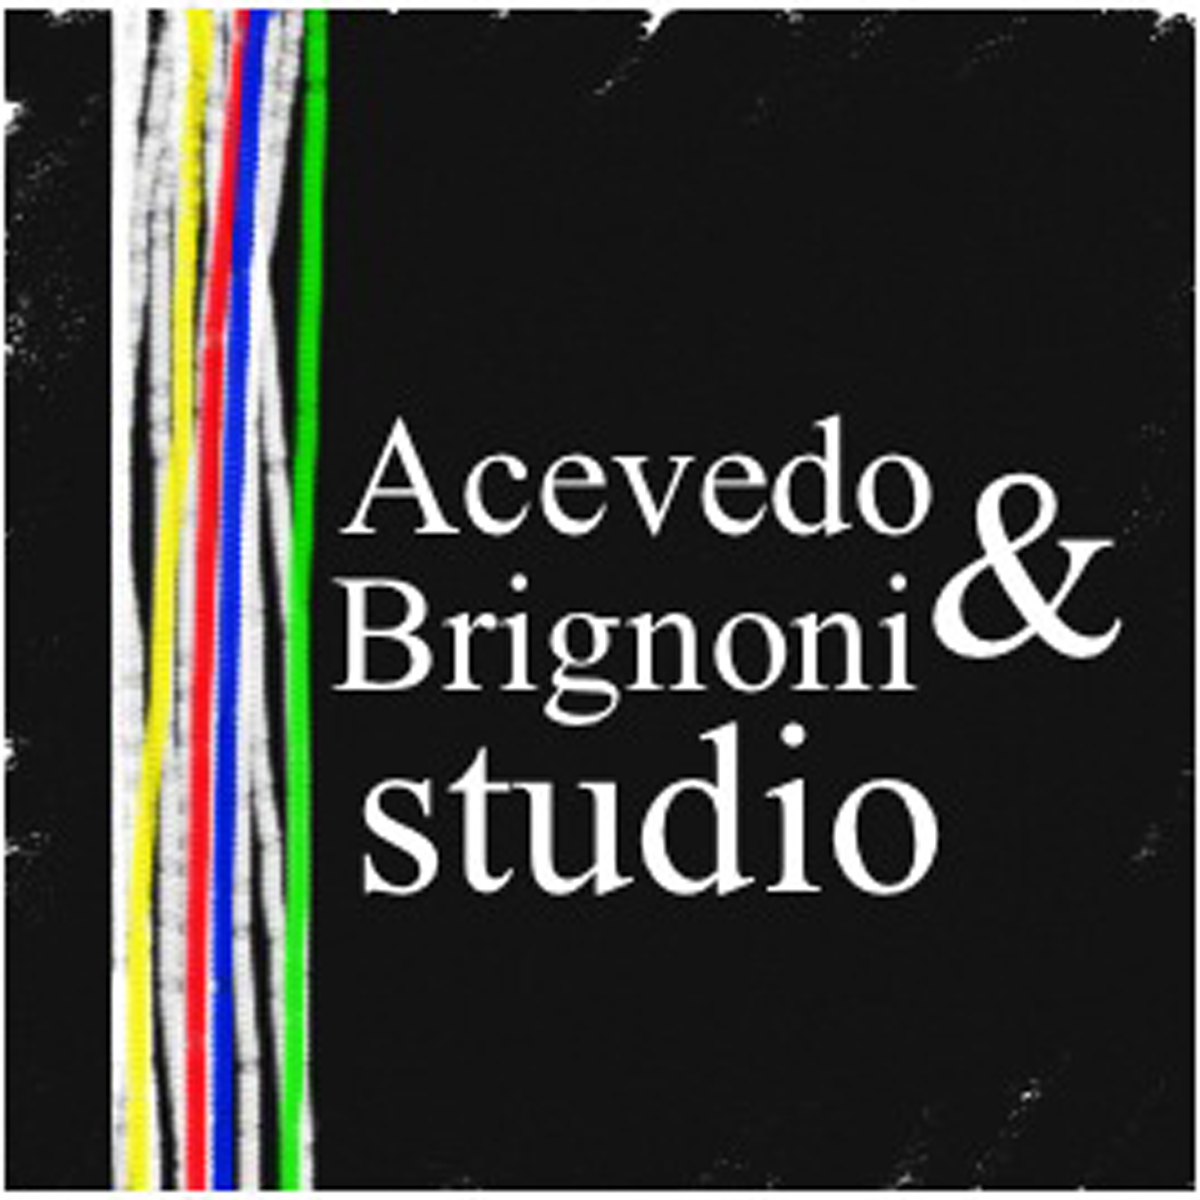 studio-logo-large.jpg